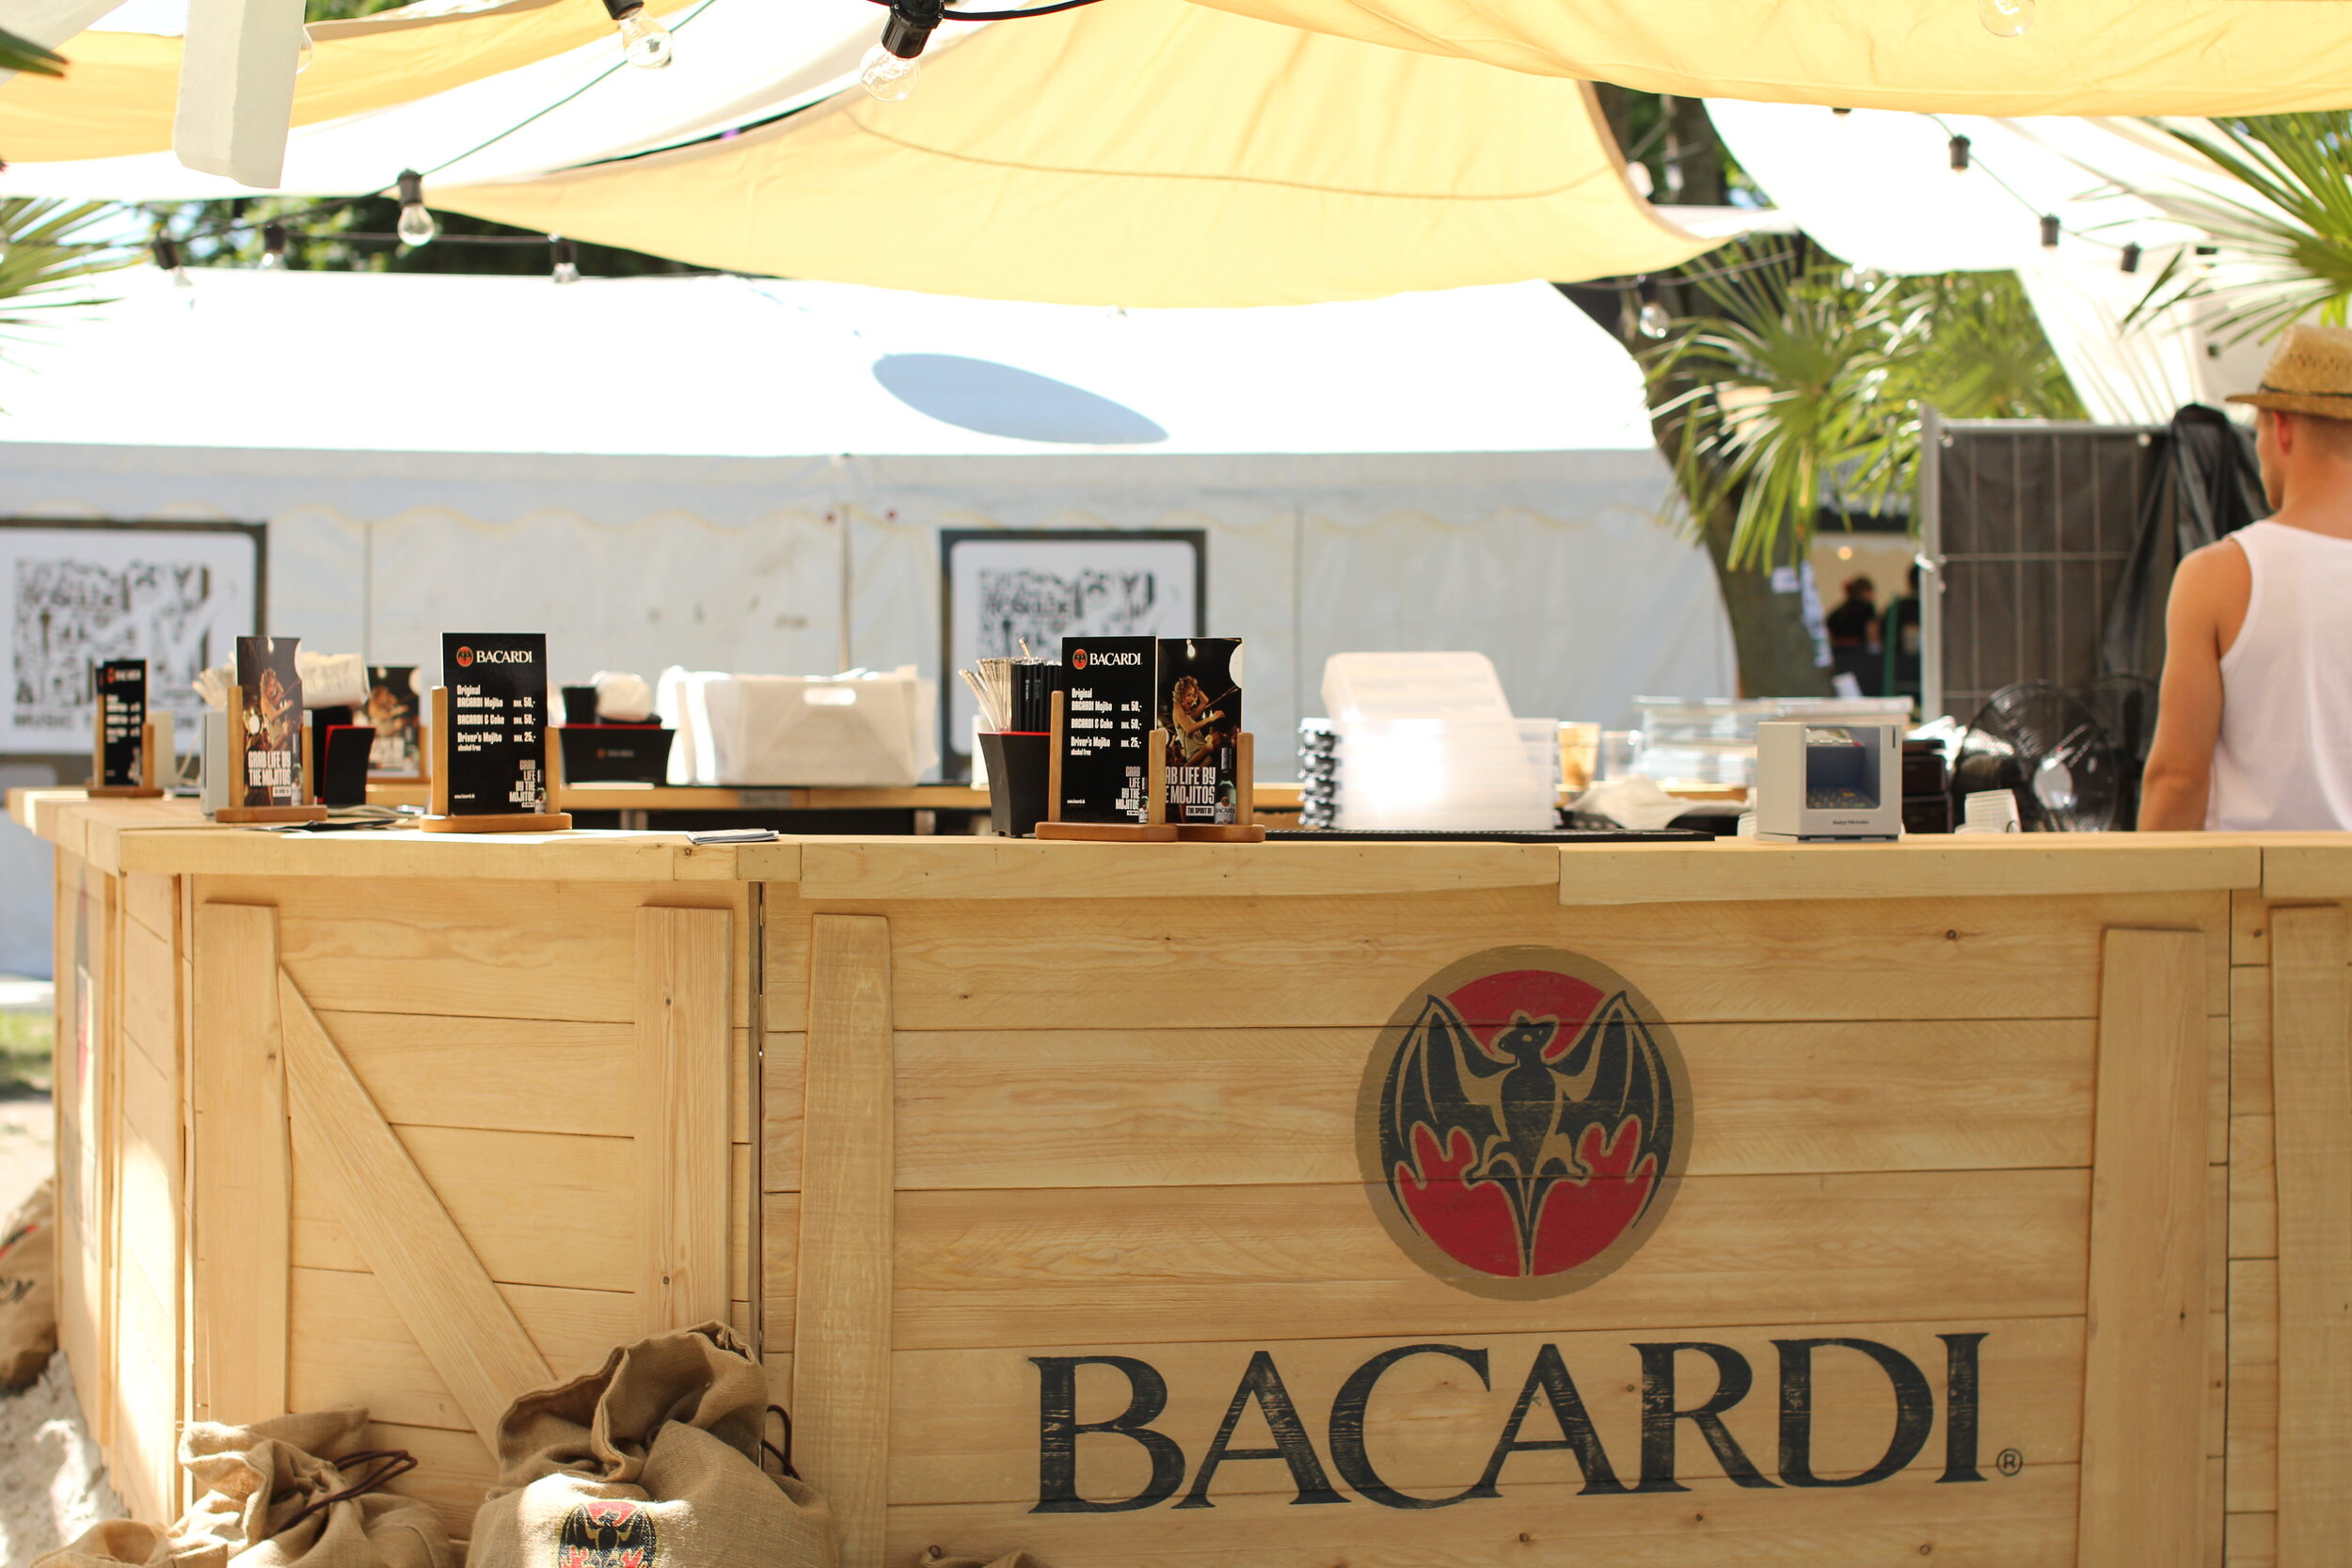 Bacardi Branded Portable Bar by Portabar